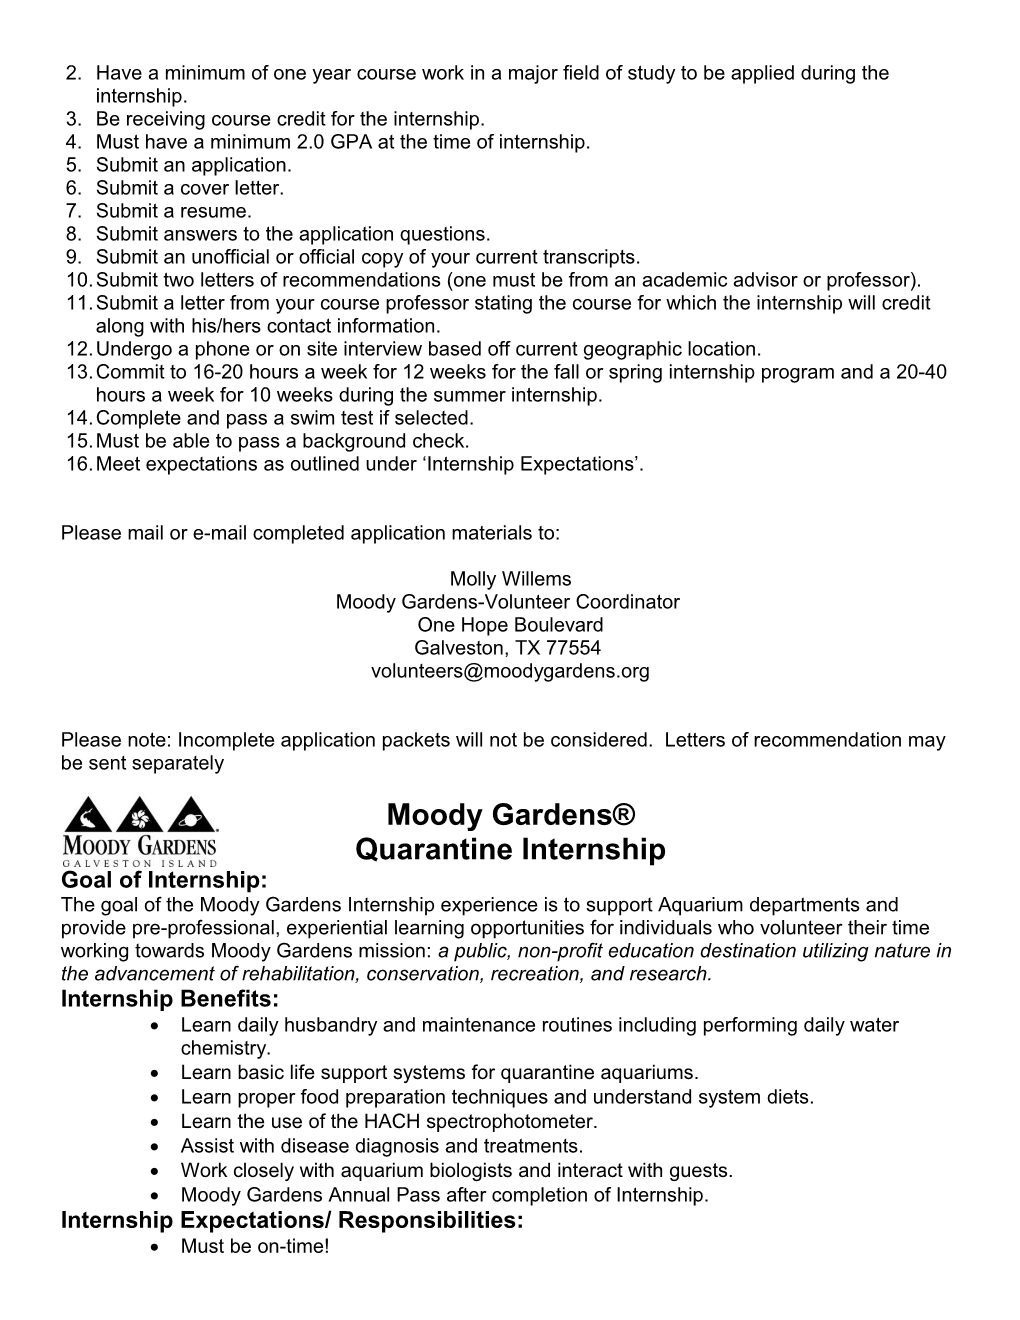 Moody Gardens Quarantine Internship Application